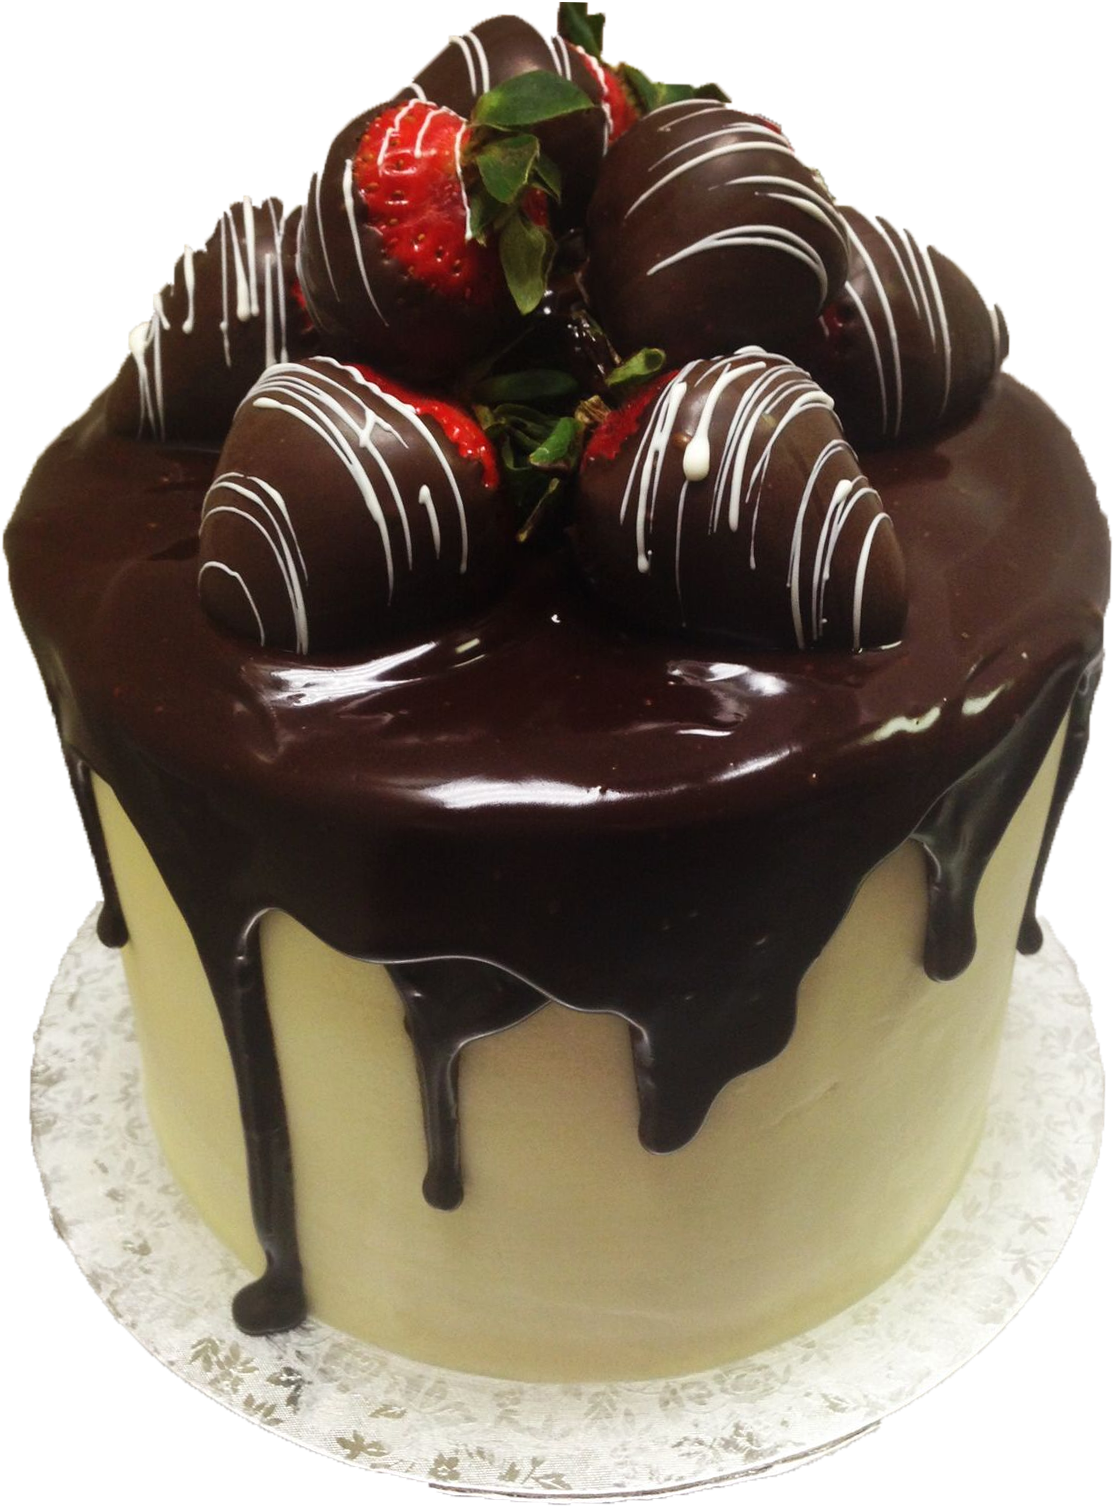 Cake Chocolate Free Download Image PNG Image